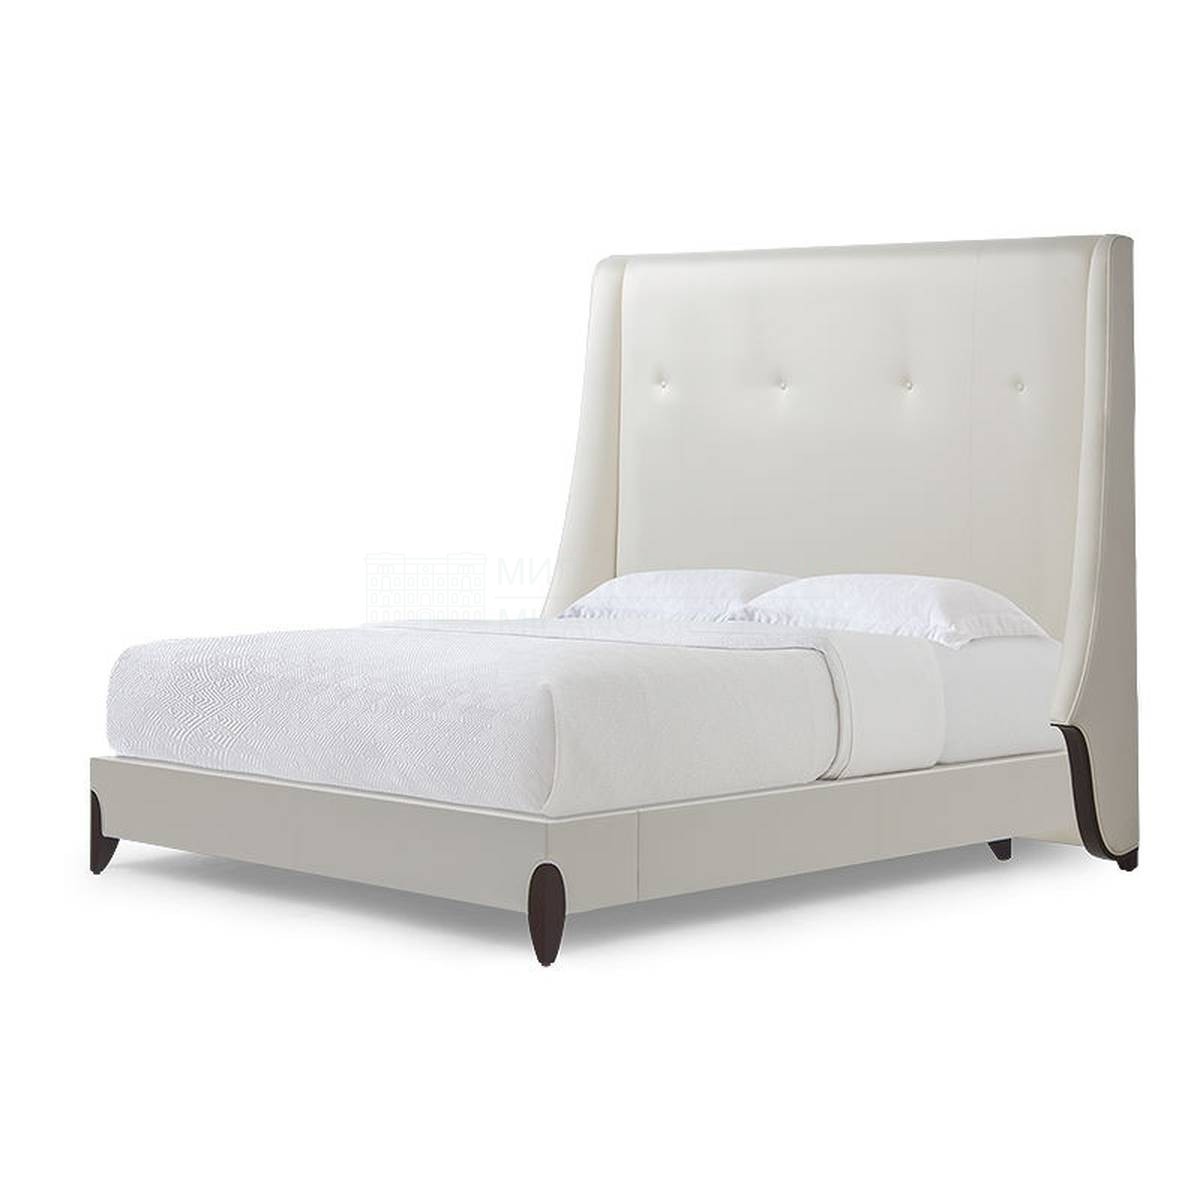 Кровать с мягким изголовьем Adelie bed из США фабрики CHRISTOPHER GUY